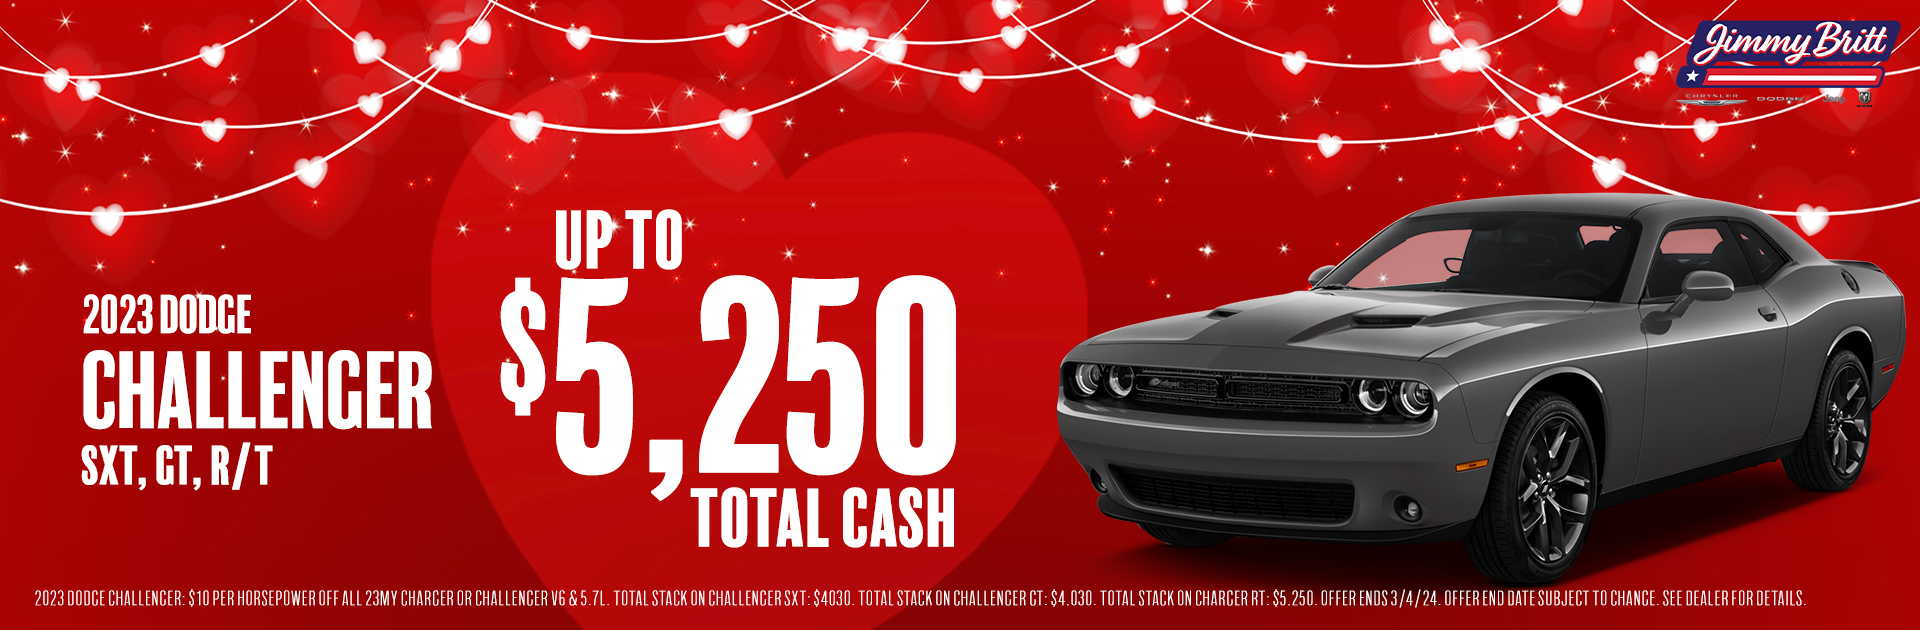 2023 Dodge Challenger SXT, GT, R/T: Up to $5,250 total cash!